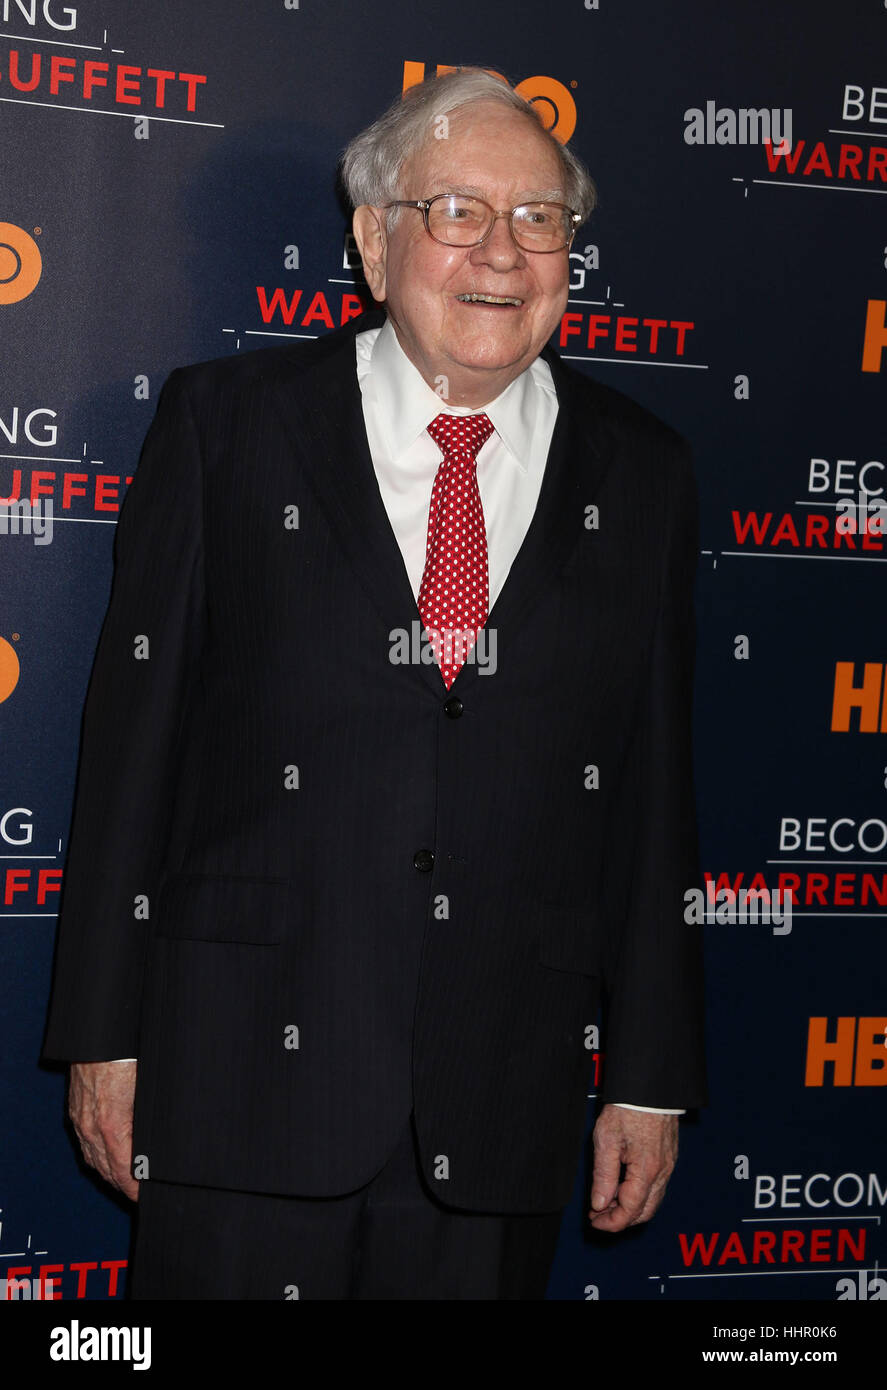 New York, USA. 19th Jan, 2017. Businessman Warren Buffett attends the world premiere of the HBO film 'Becoming Warren Buffett' held at the Museum of Modern Art. Credit: Nancy Kaszerman/ZUMA Wire/Alamy Live News Stock Photo